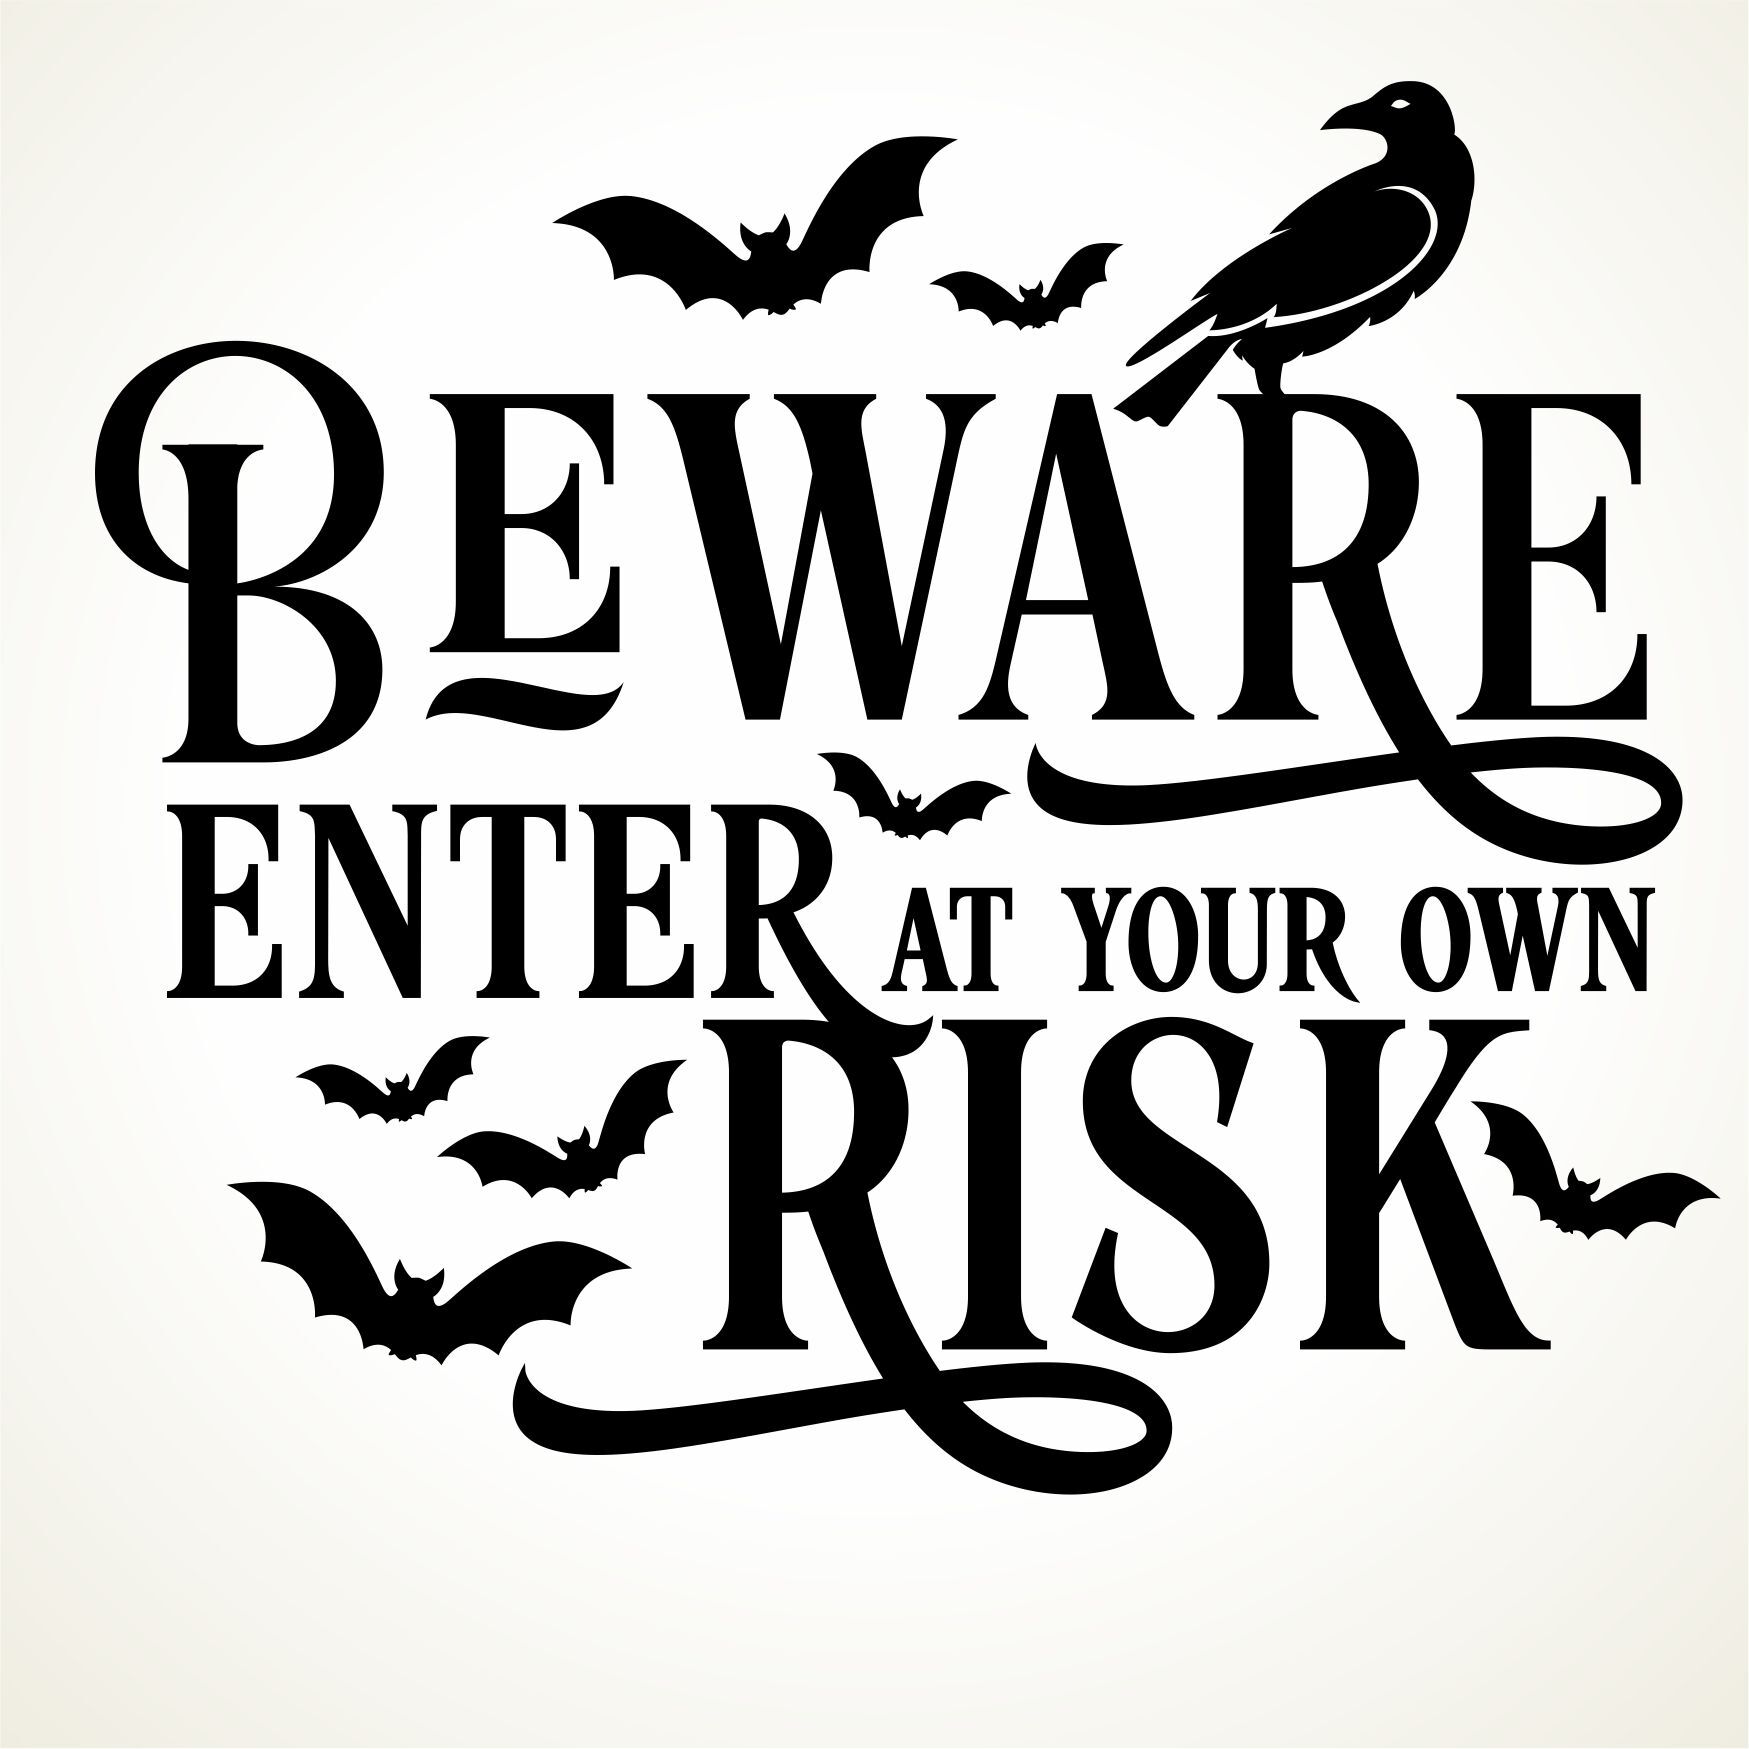 Halloween spreuken tegeltje beware enter at your own risk